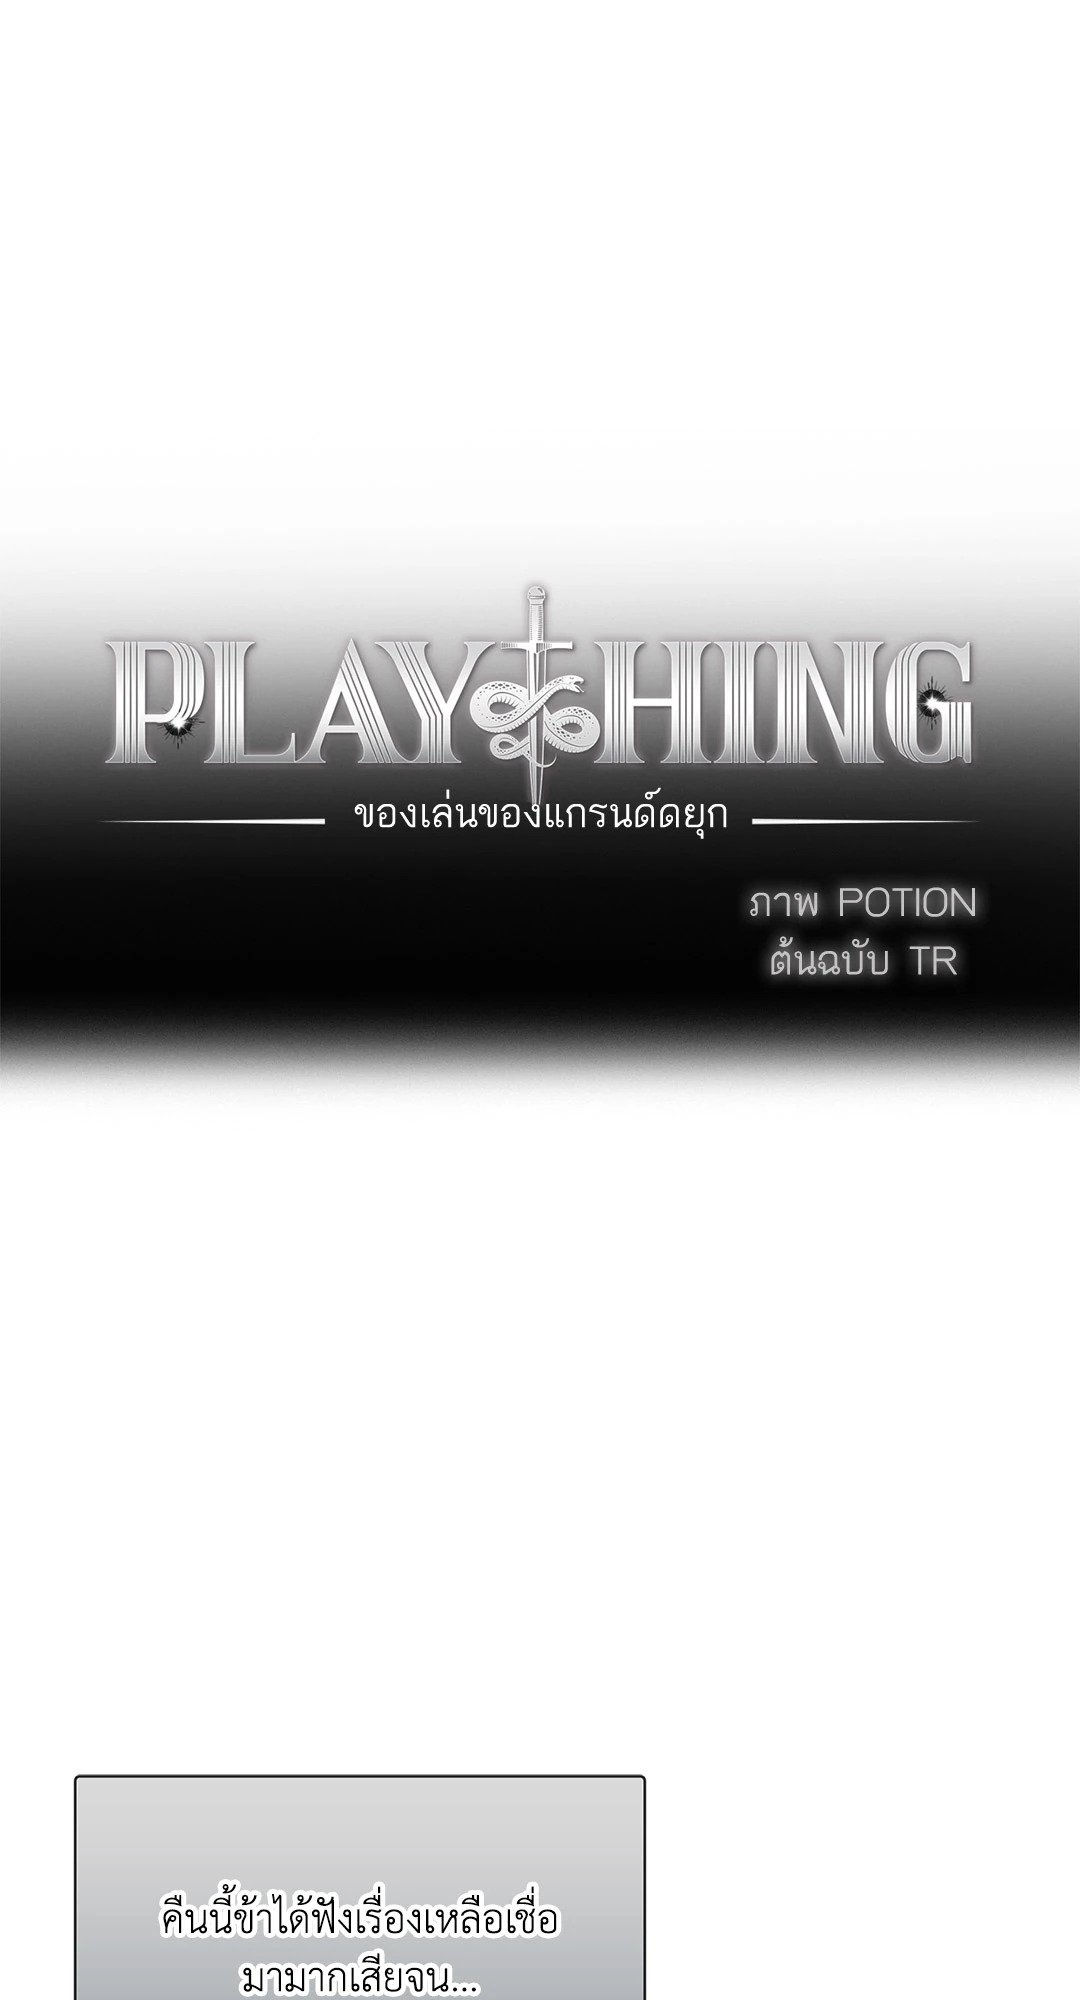 Plaything 26 15